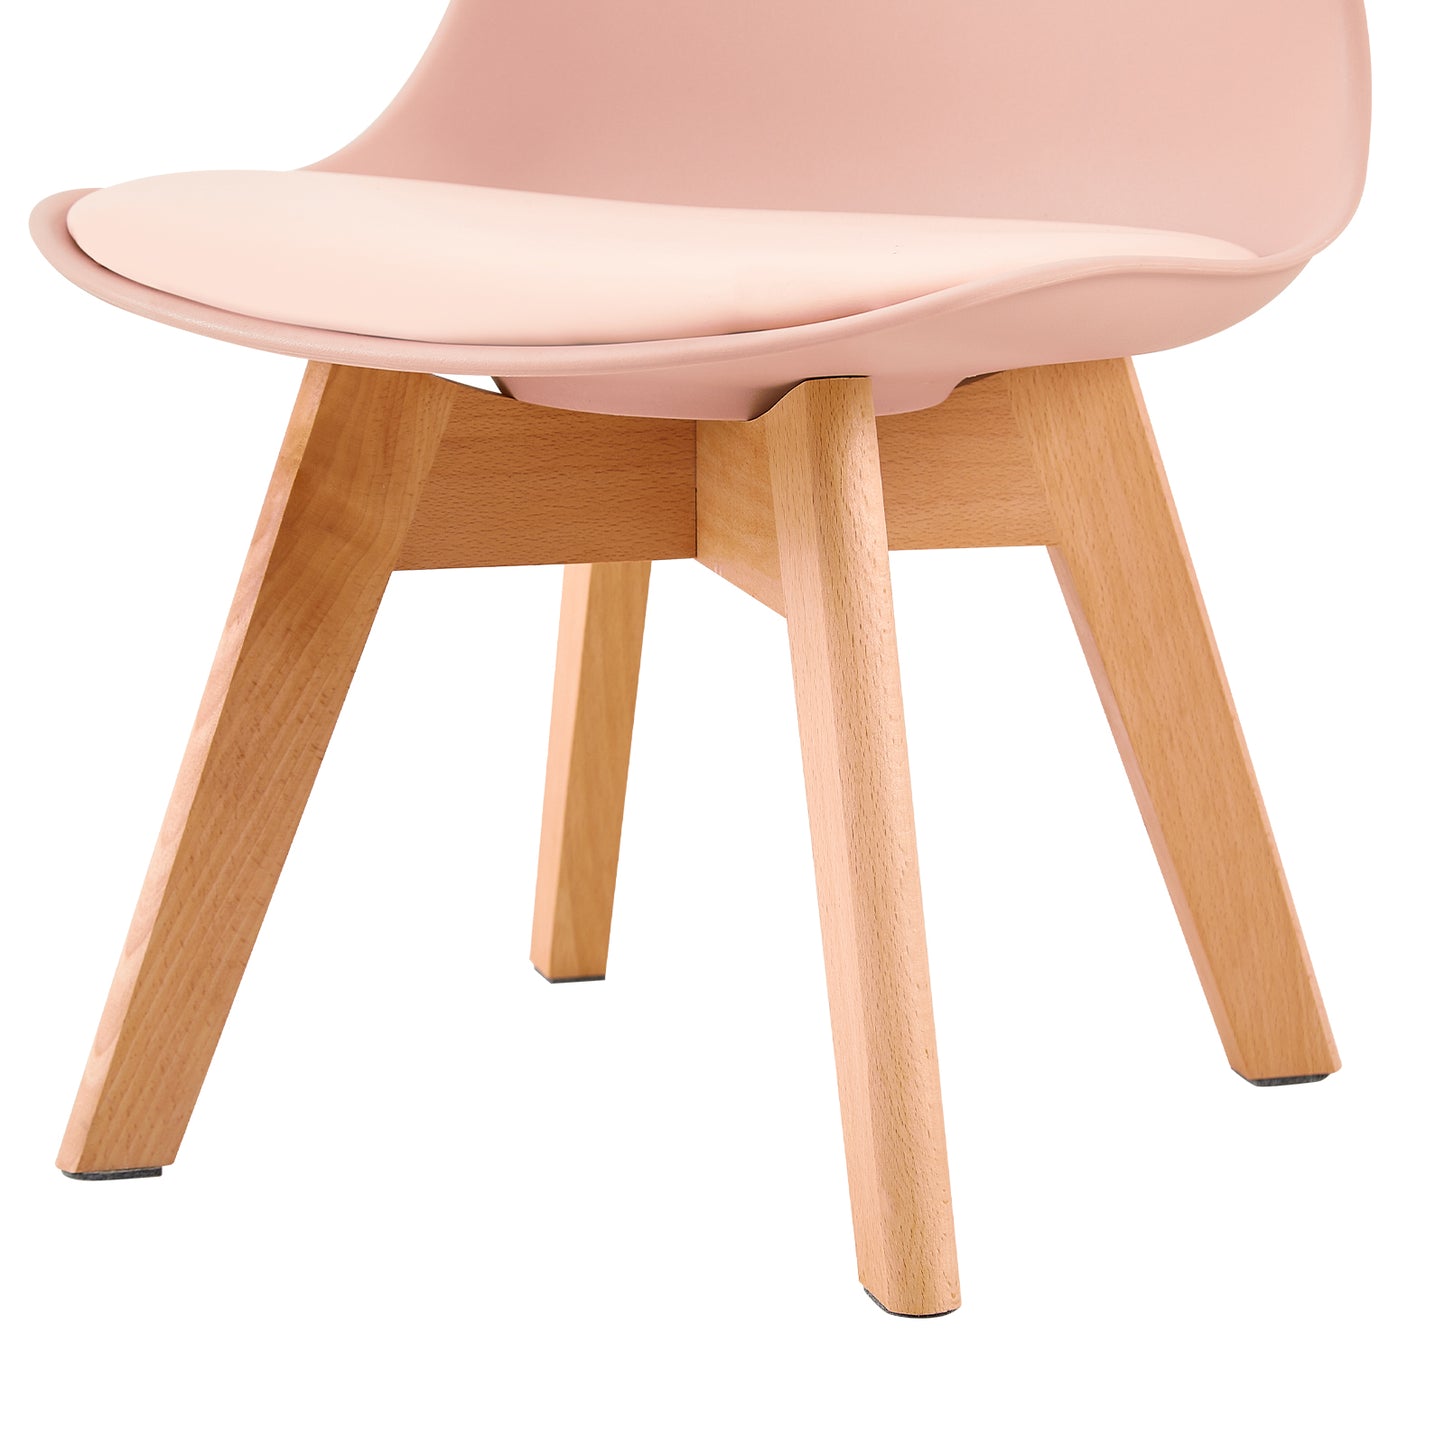 GRAND Children's Dining Chair Beech Legs Set of 2 - Pink/White